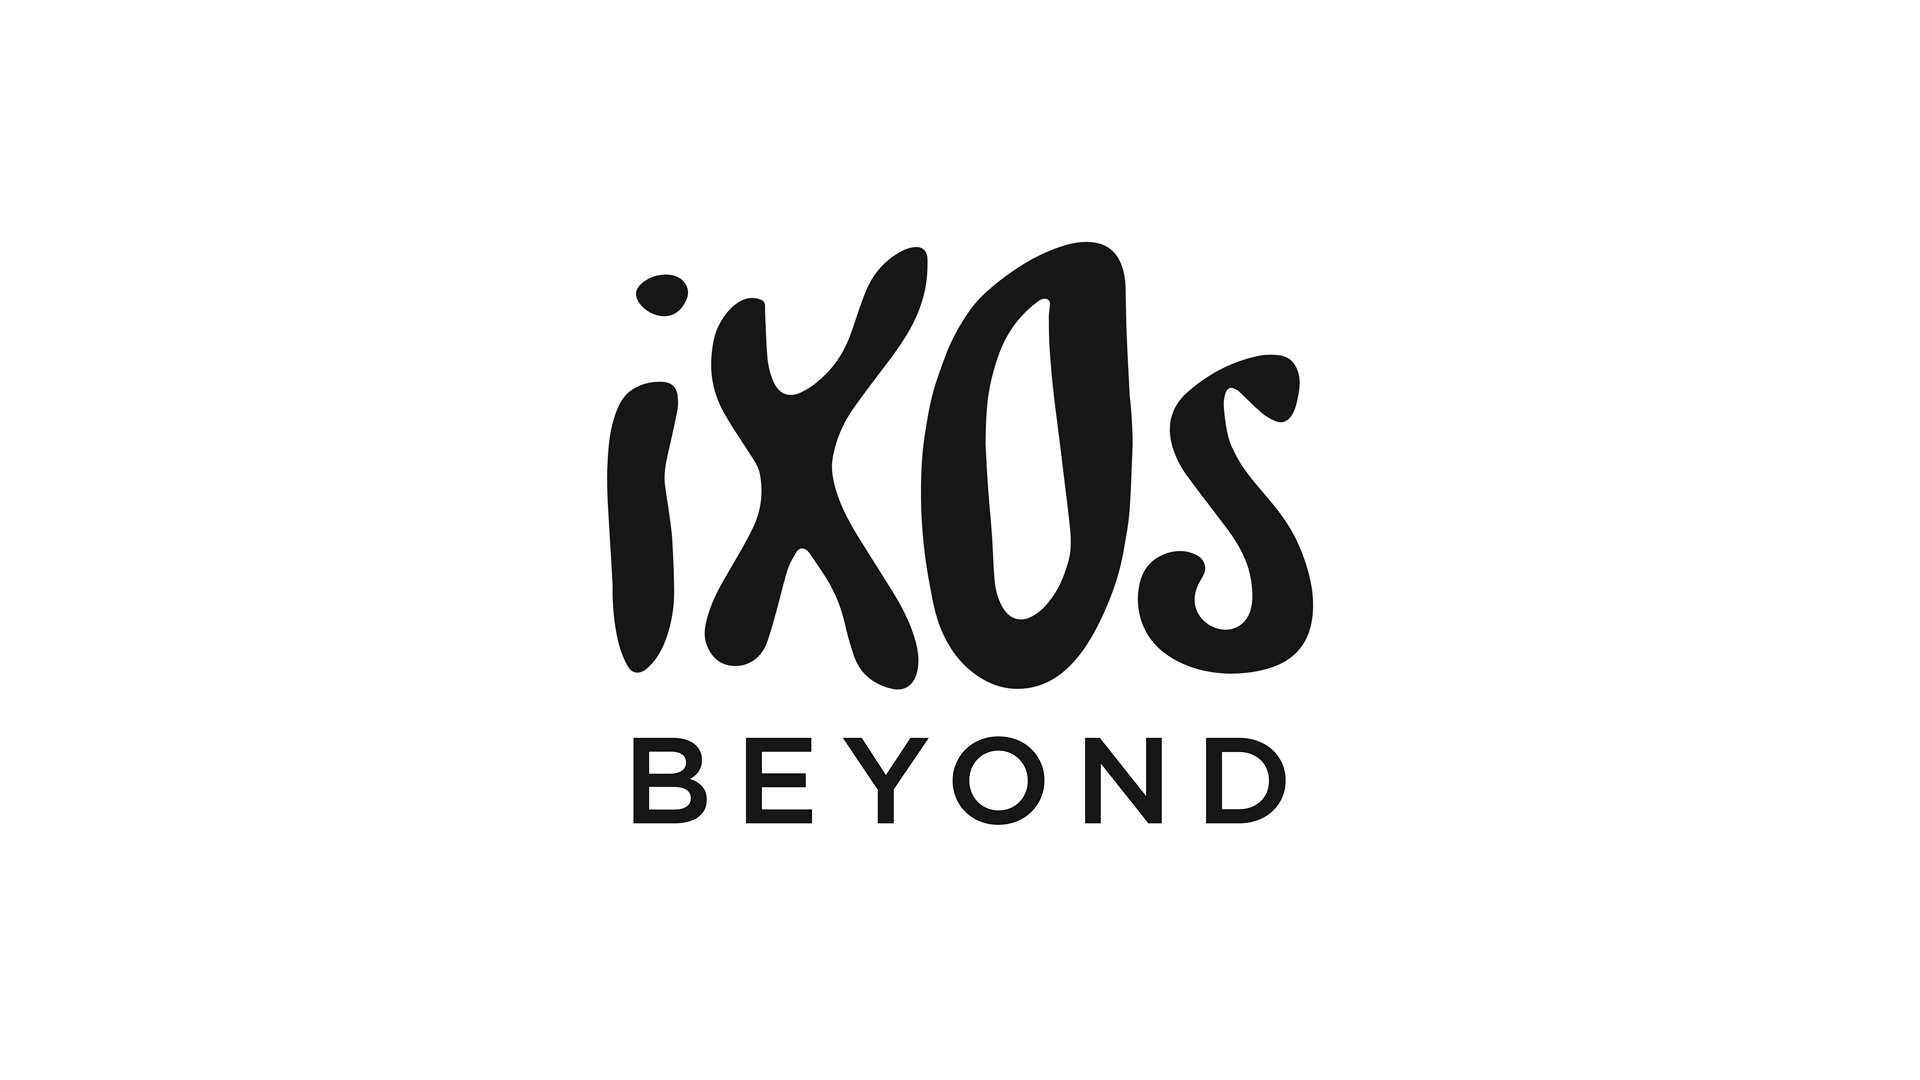 Ixos logo